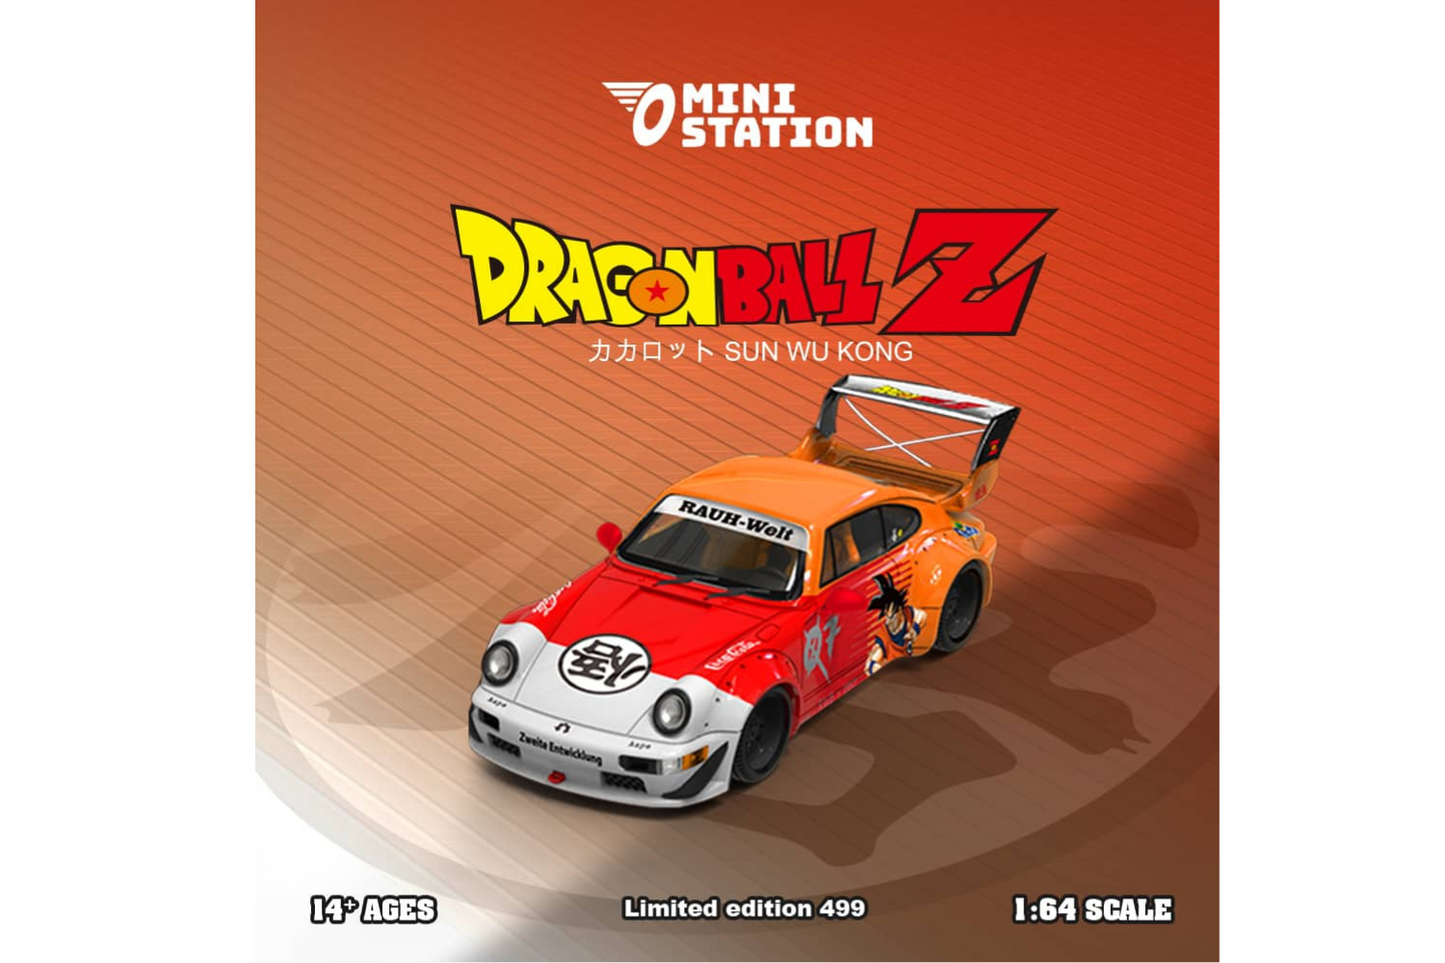 Mini Station 1/64 Porsche RWB 964 in Dragon Ball Z Livery